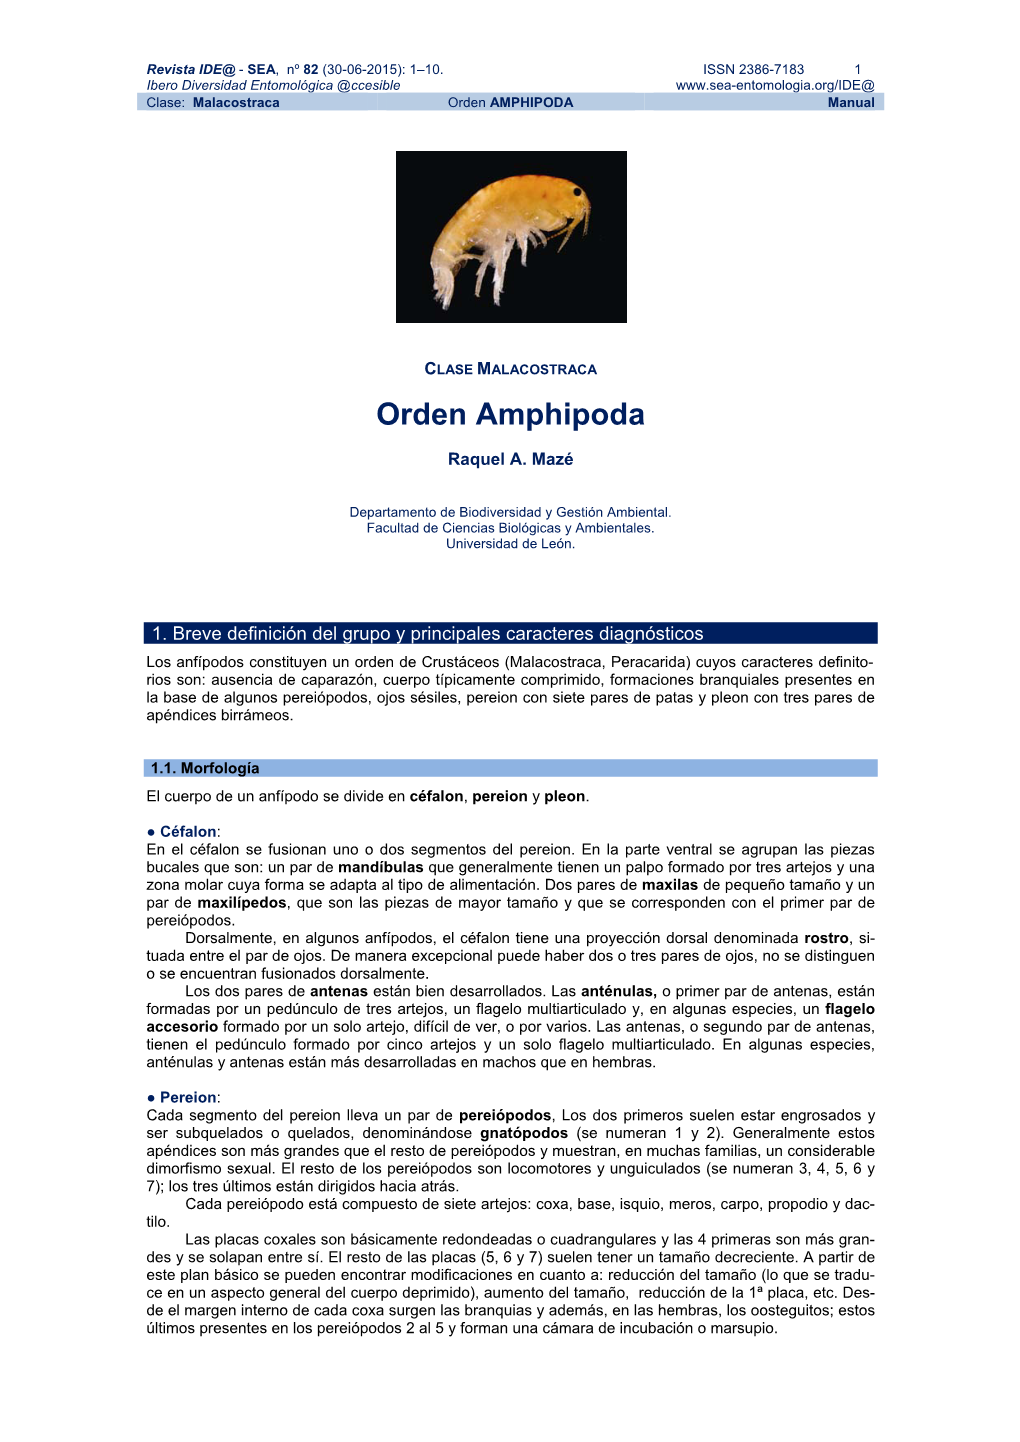 Orden AMPHIPODA Manual